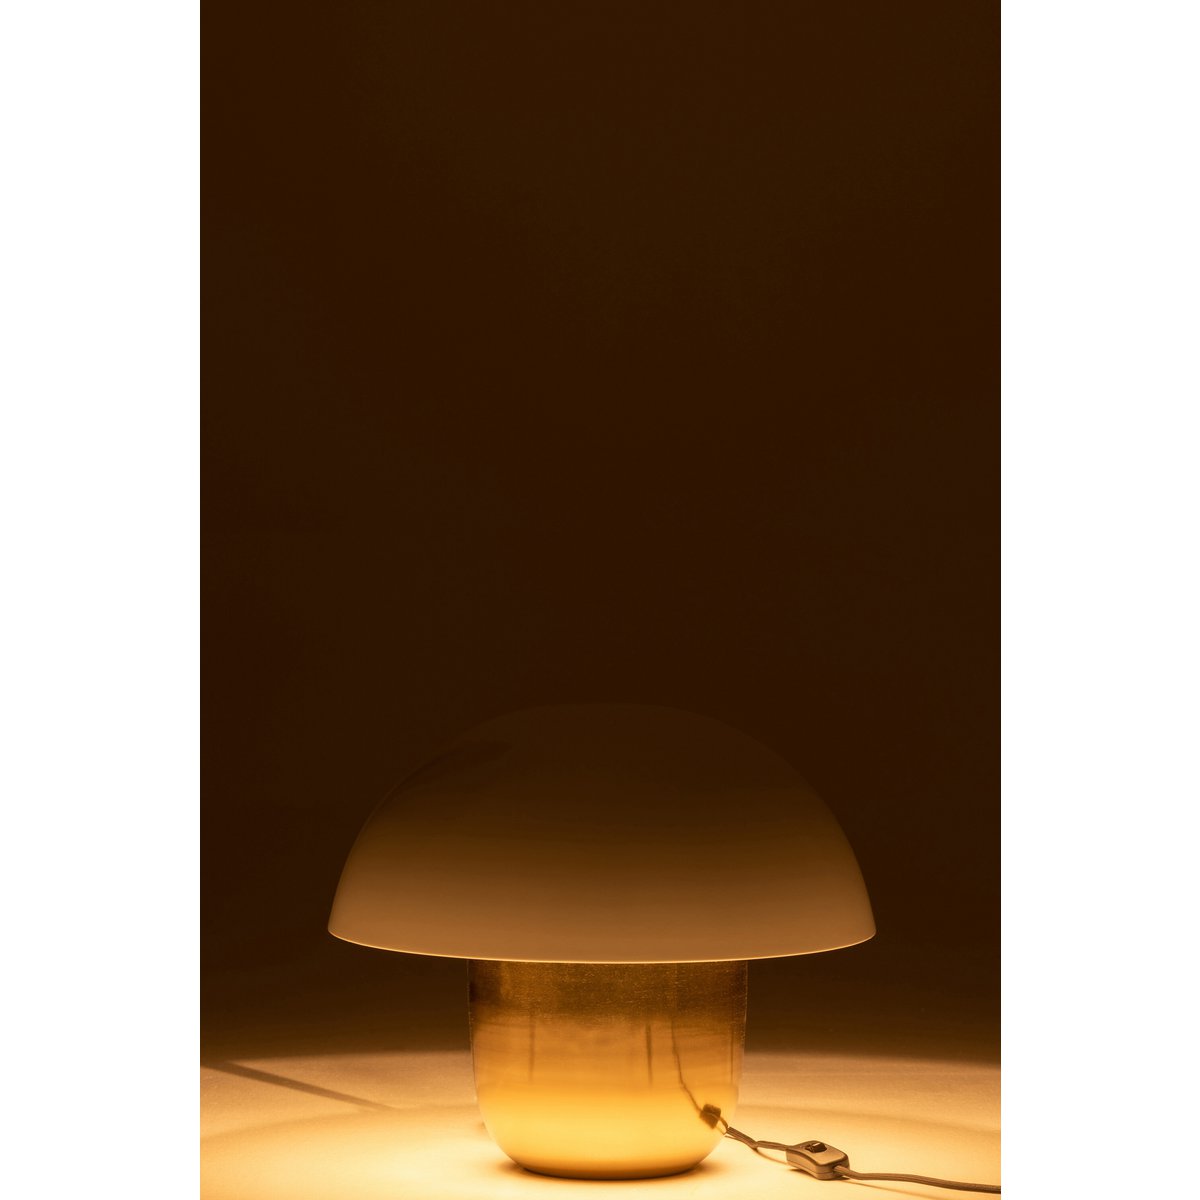 J-Line Lamp Paddenstoel Ijzer Wit/Goud Small